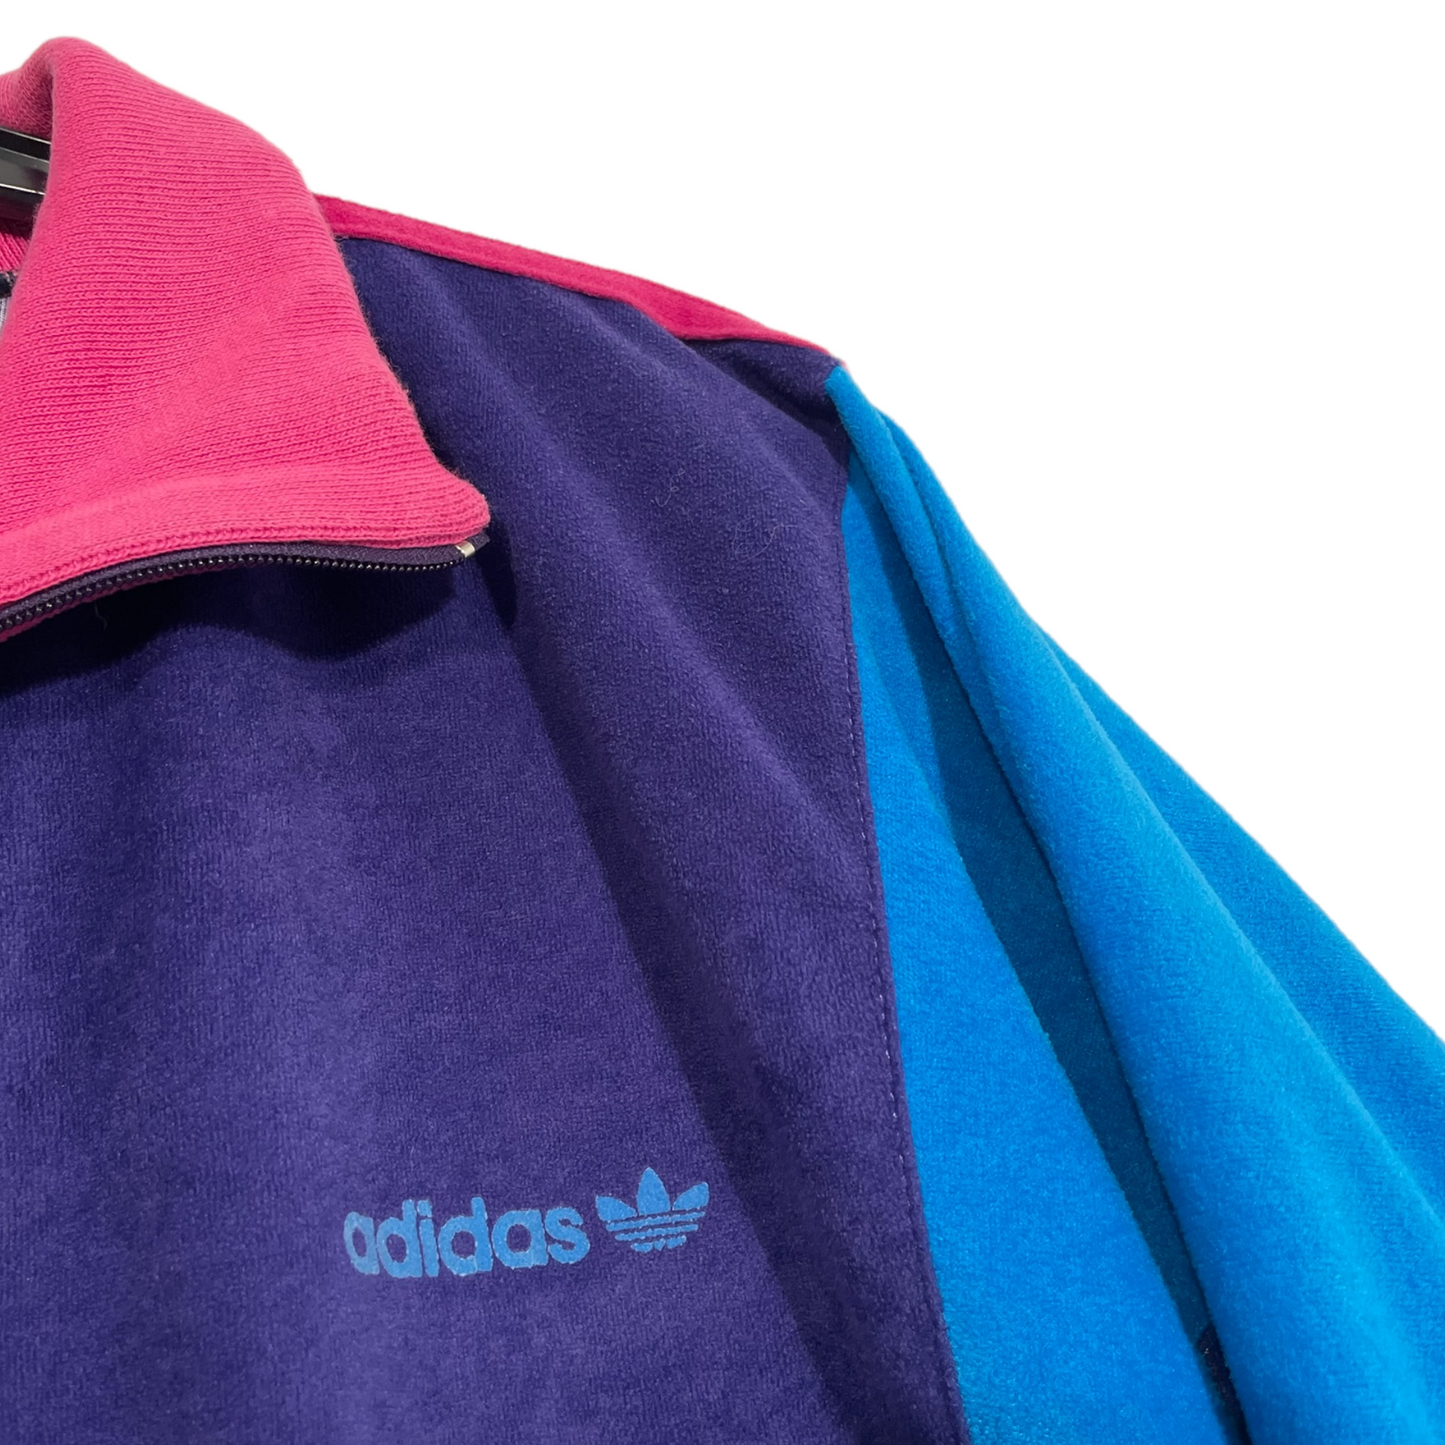 Adidas Velvet Sweatjacket